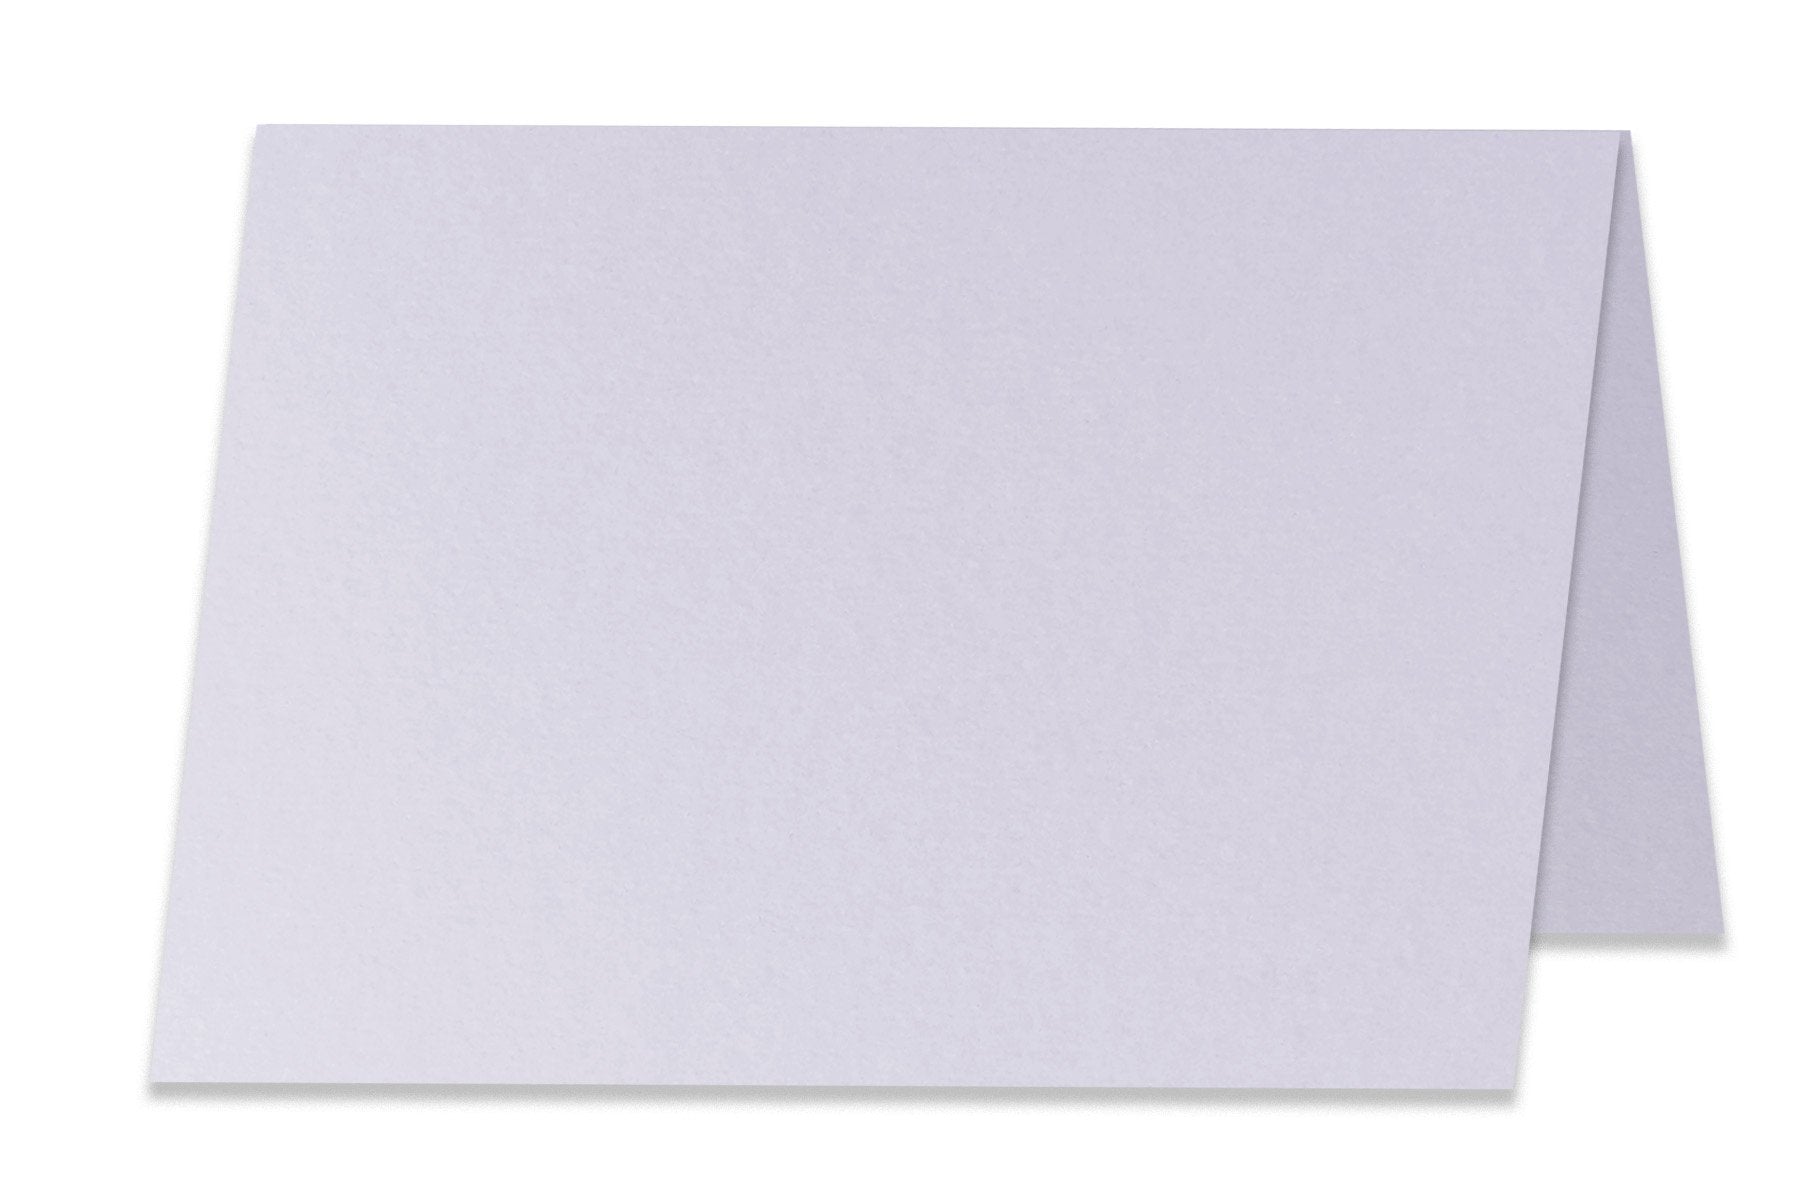 2 X 3.5 Inch Blank Business Card / Kraft/ Cream/ White Flat Note